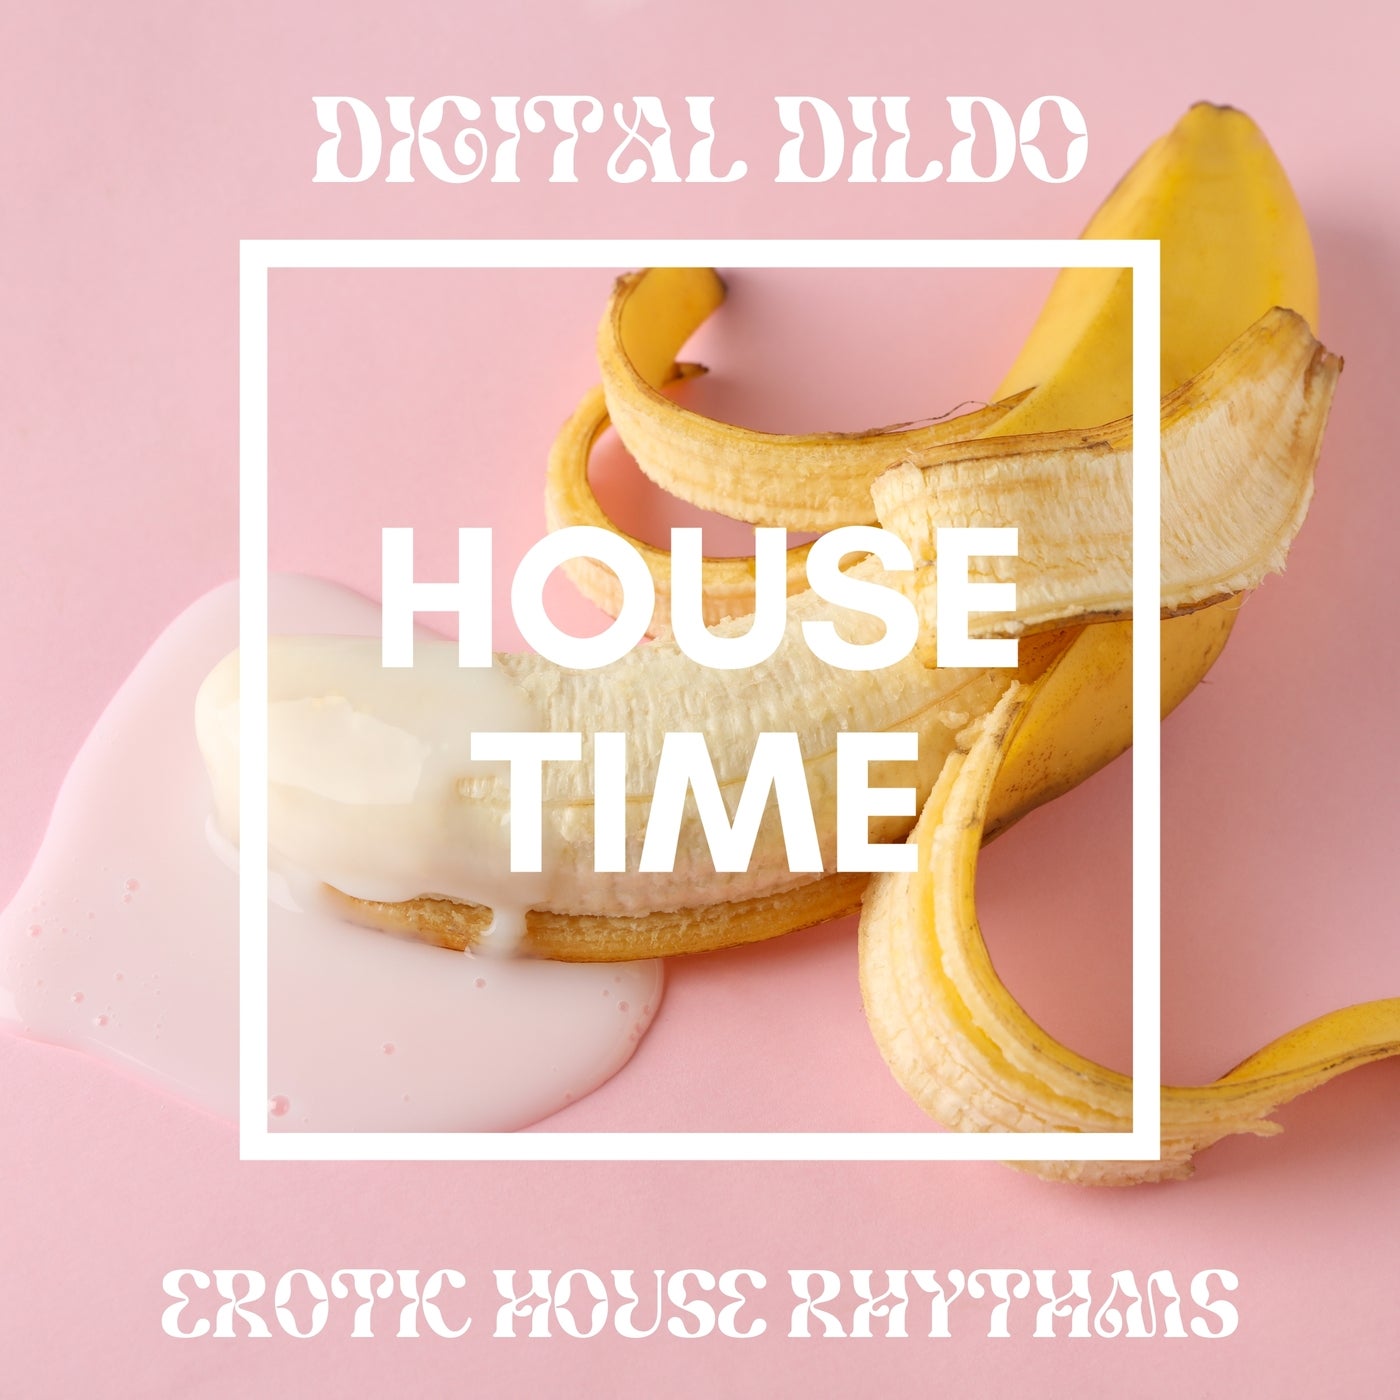 Digital Dildo (Erotic House Rhythms)